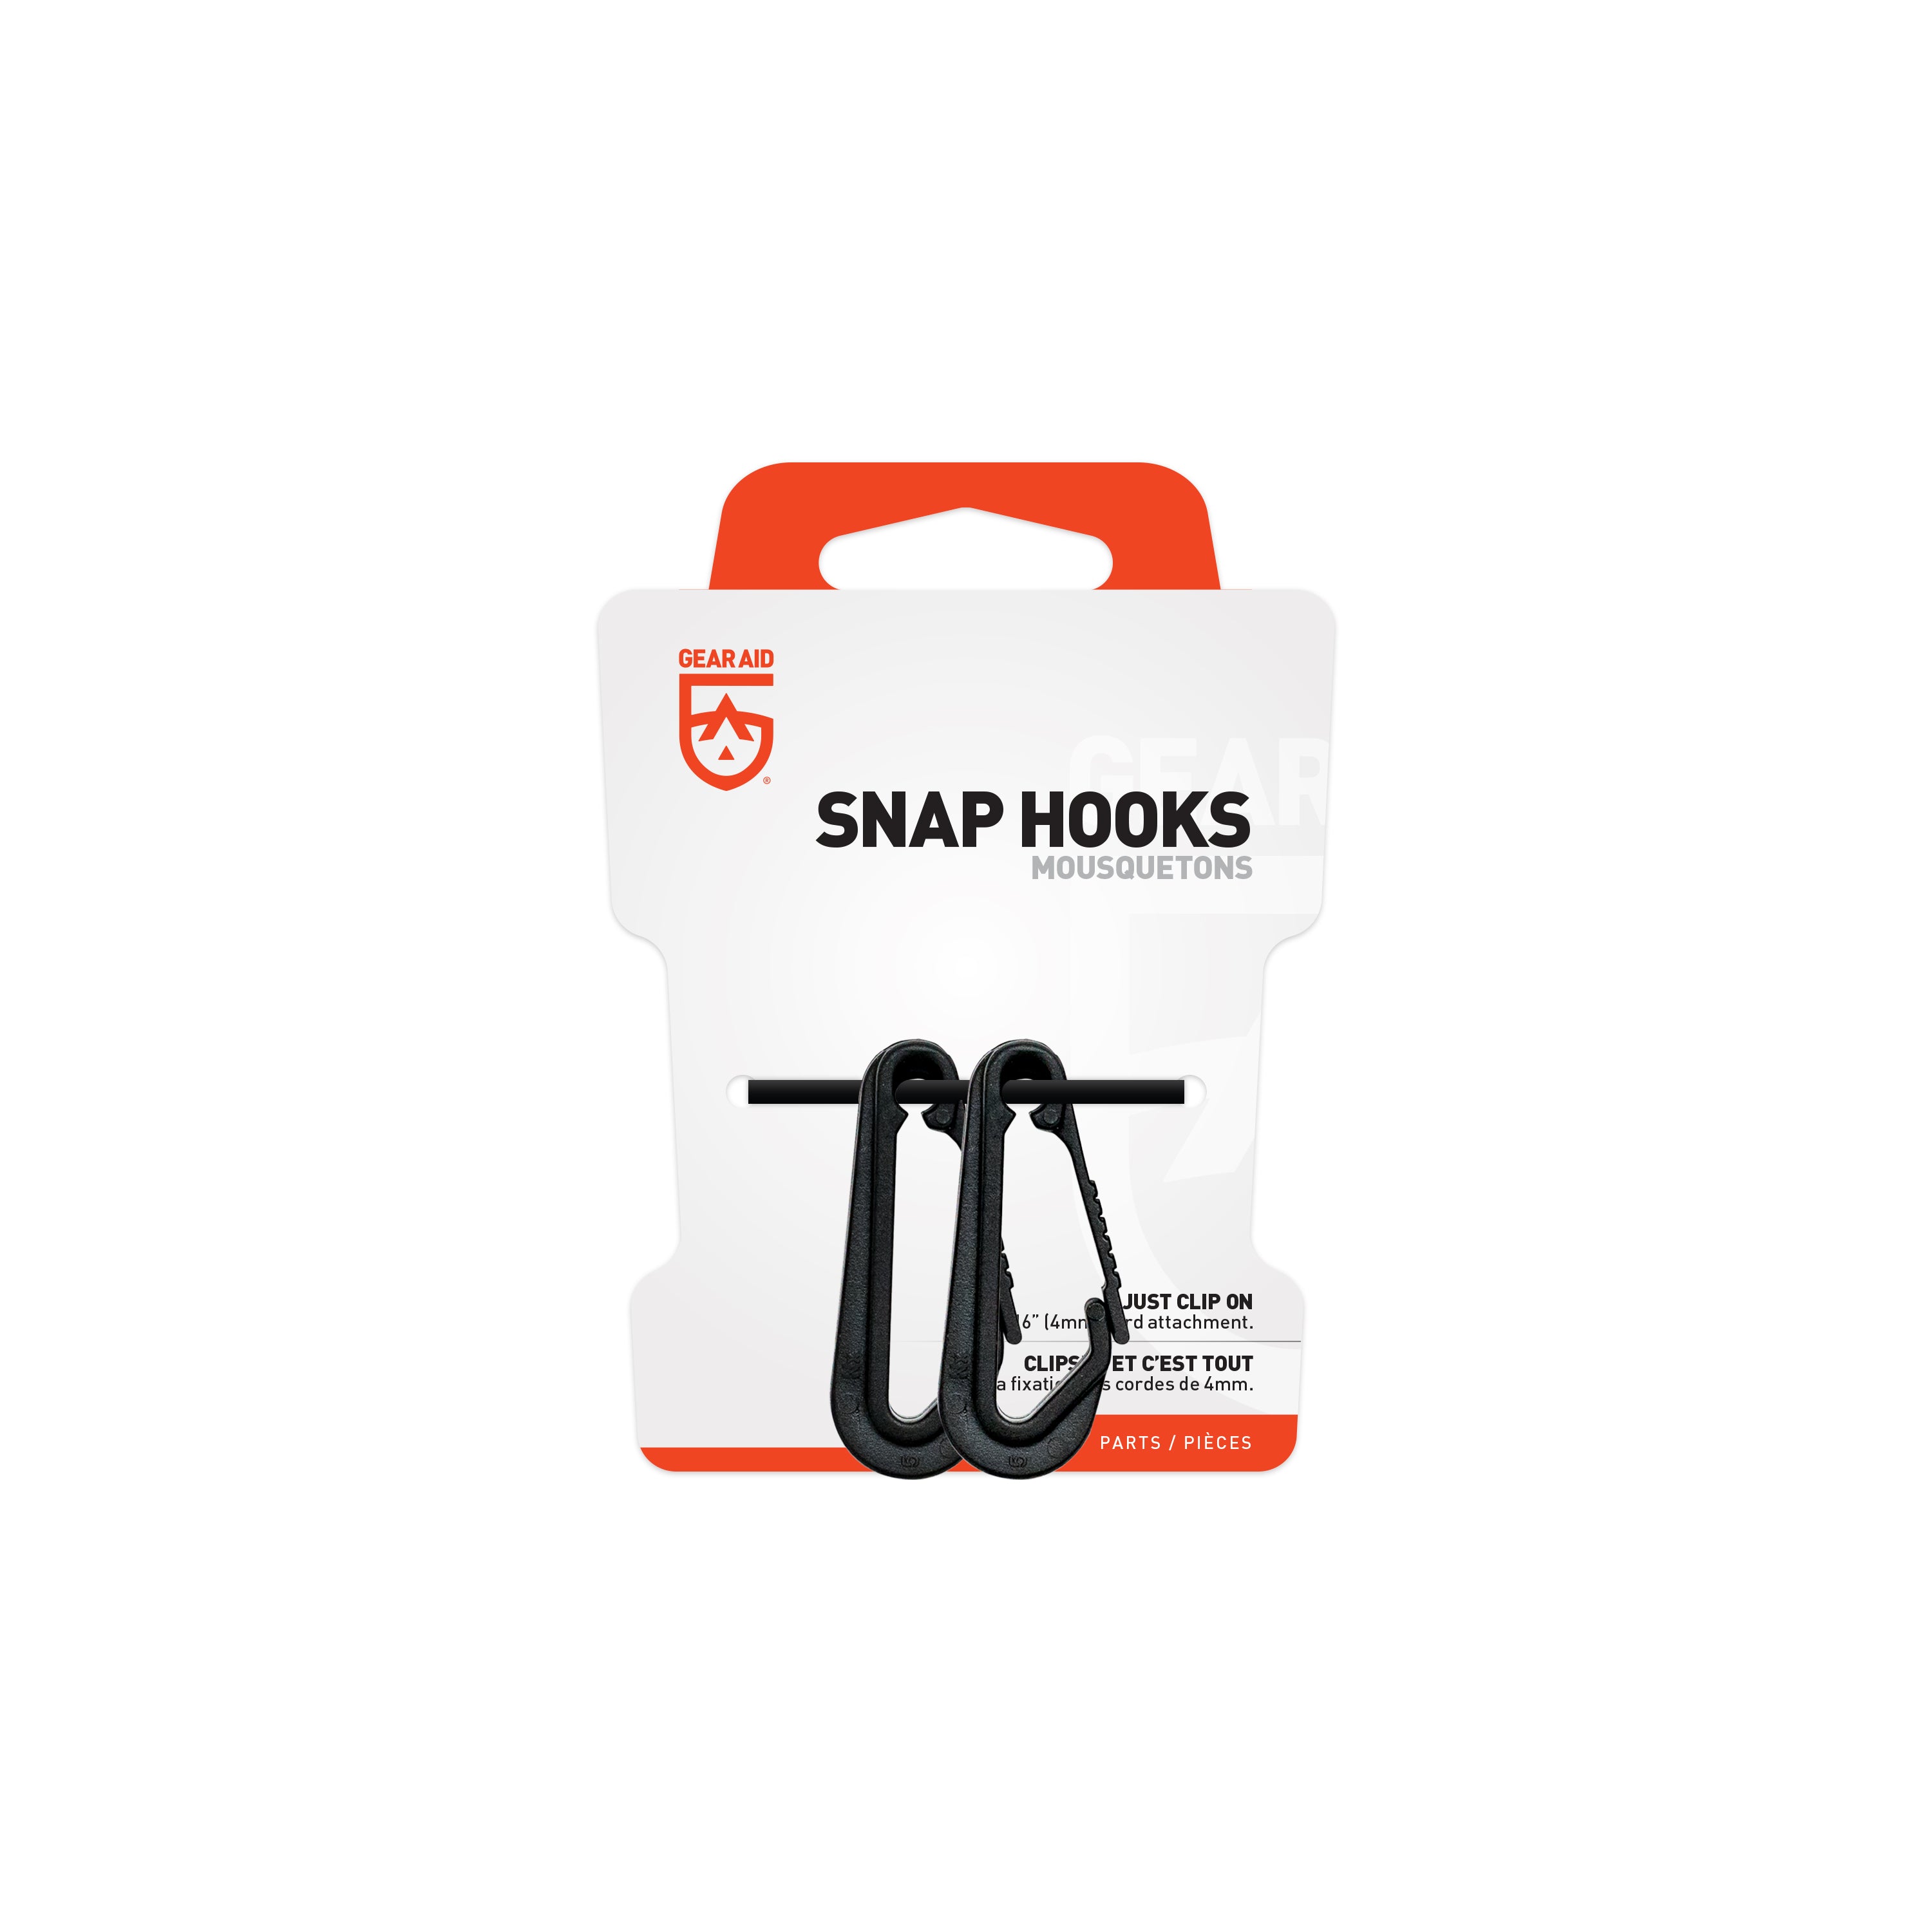 Gear Aid Snap Hooks